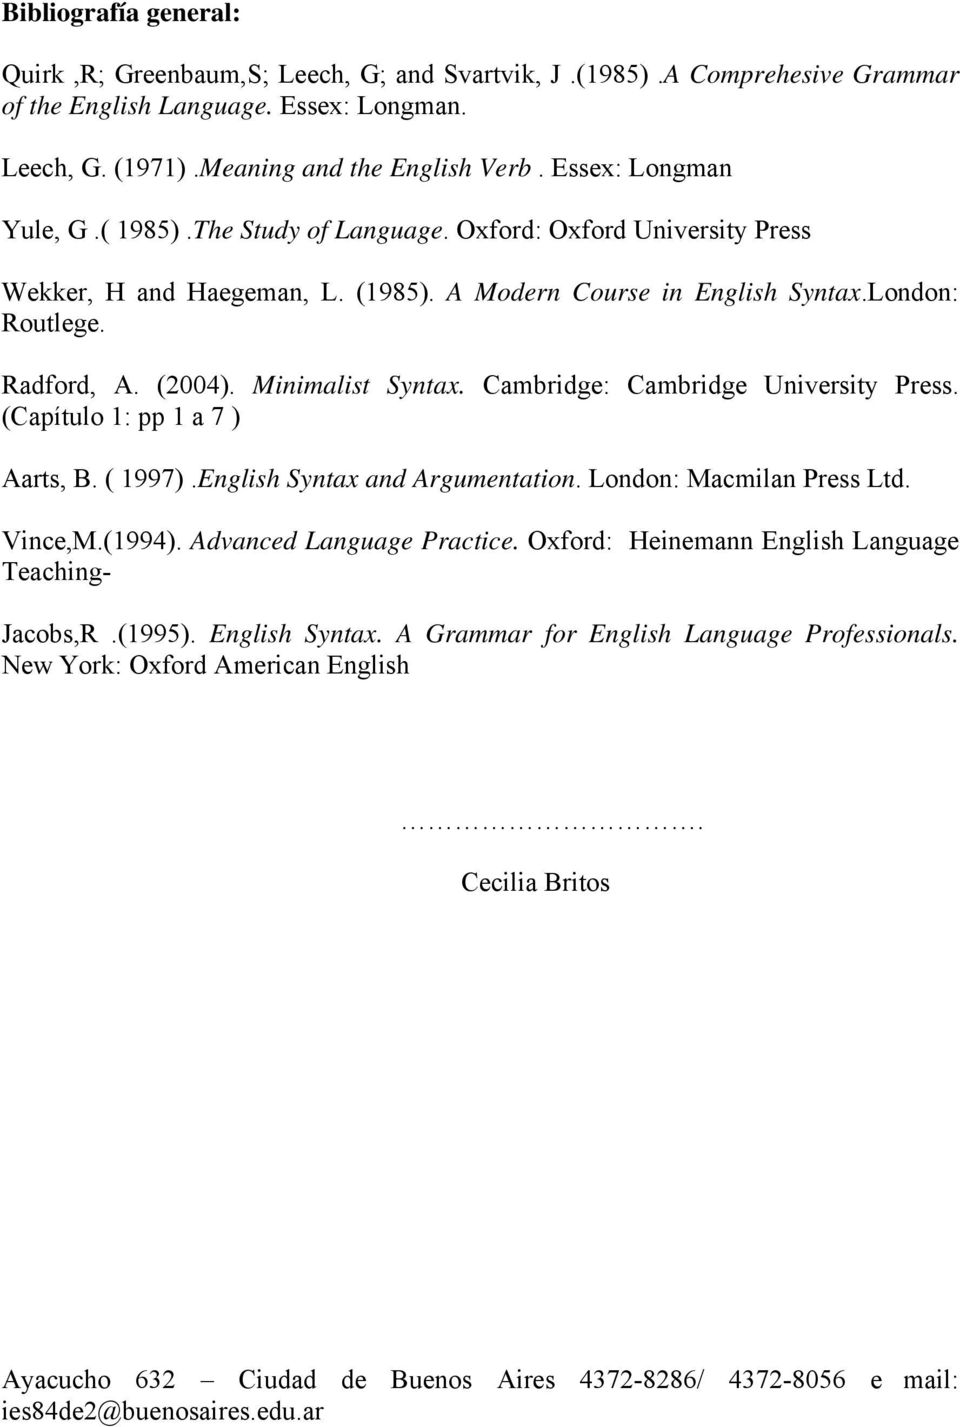 (2004). Minimalist Syntax. Cambridge: Cambridge University Press. (Capítulo 1: pp 1 a 7 ) Aarts, B. ( 1997).English Syntax and Argumentation. London: Macmilan Press Ltd. Vince,M.(1994).